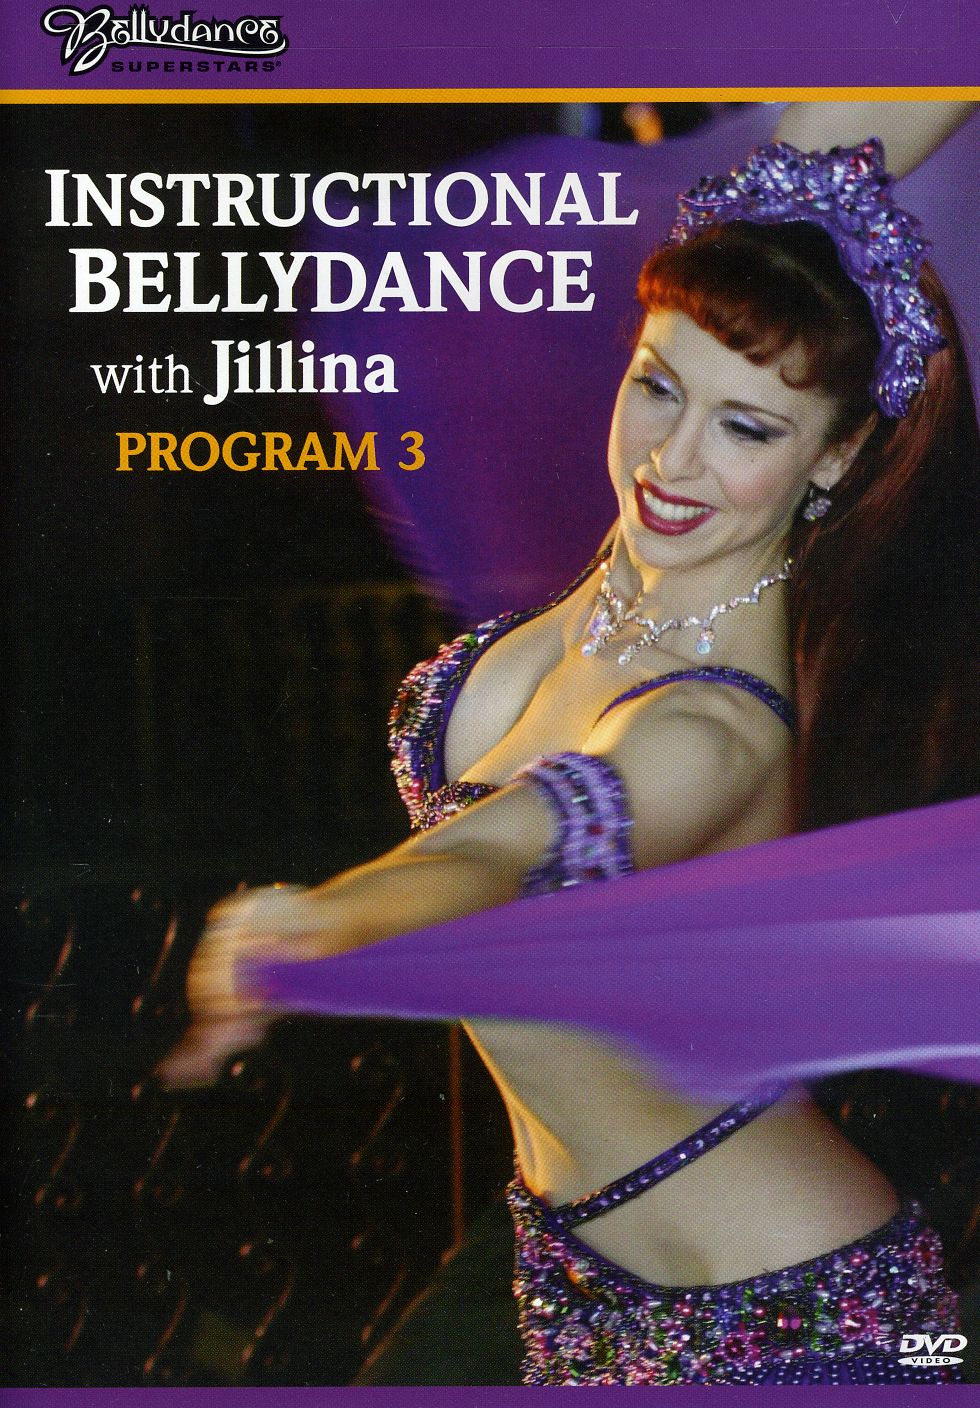 INSTRUCTIONAL BELLYDANCE WITH JILLINA: PROGRAM 3